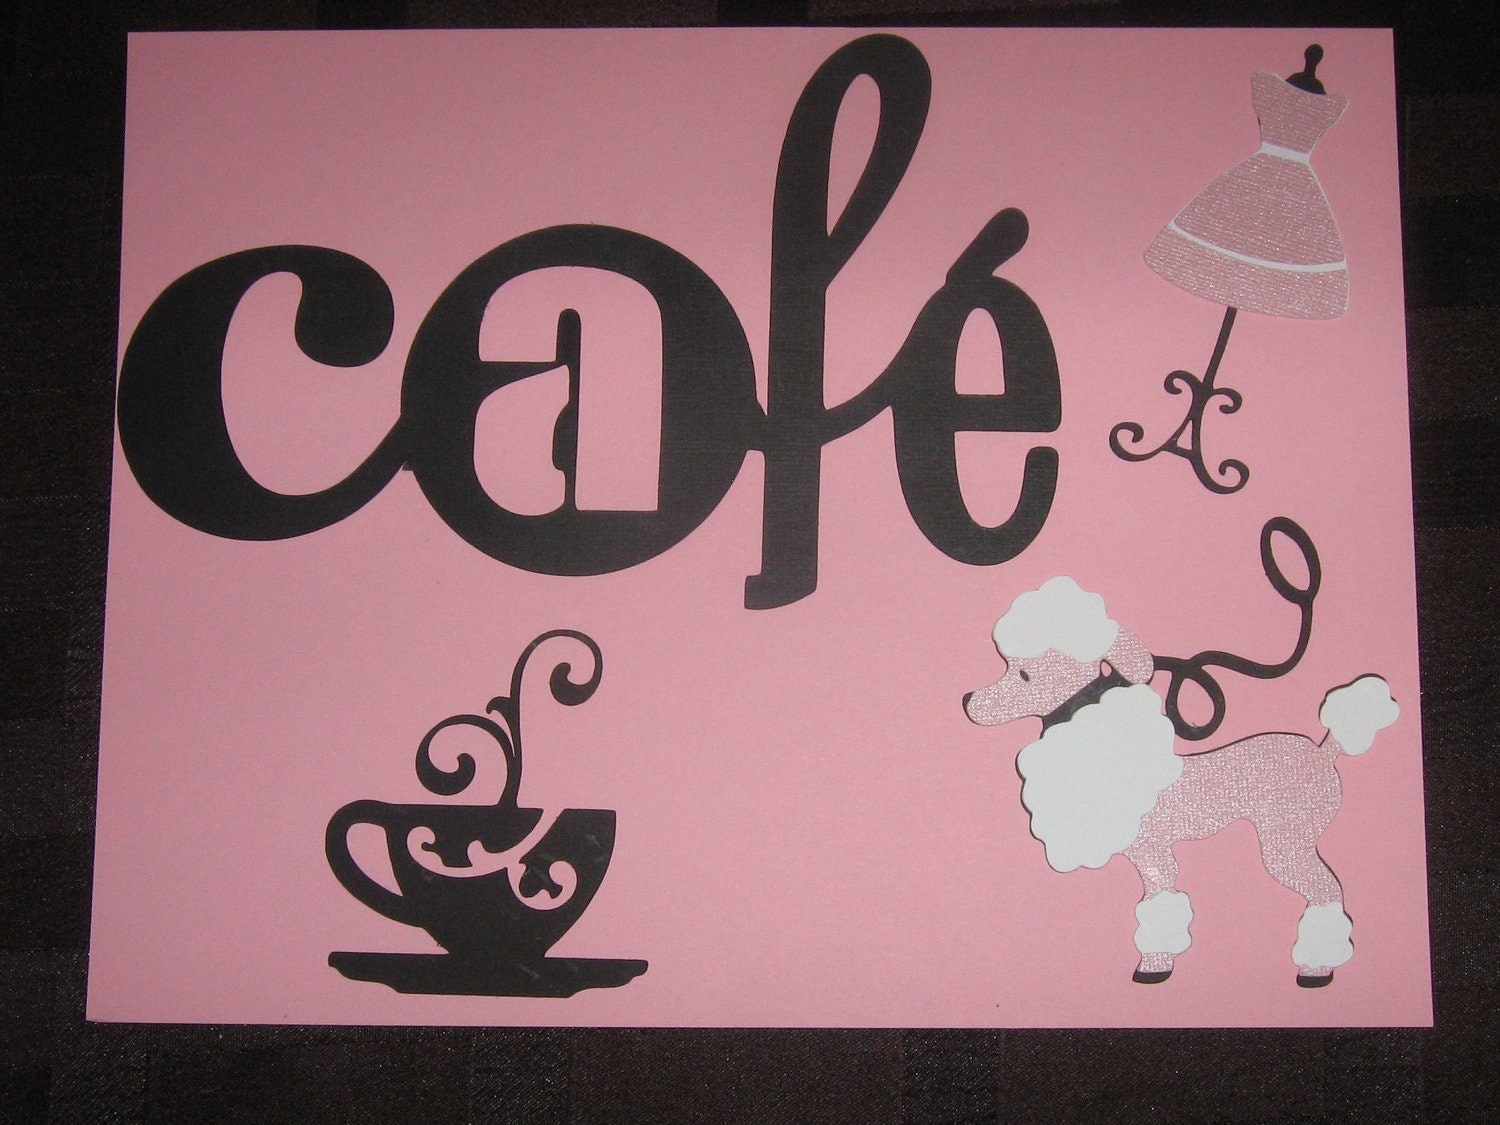 Paris Cafe Sign